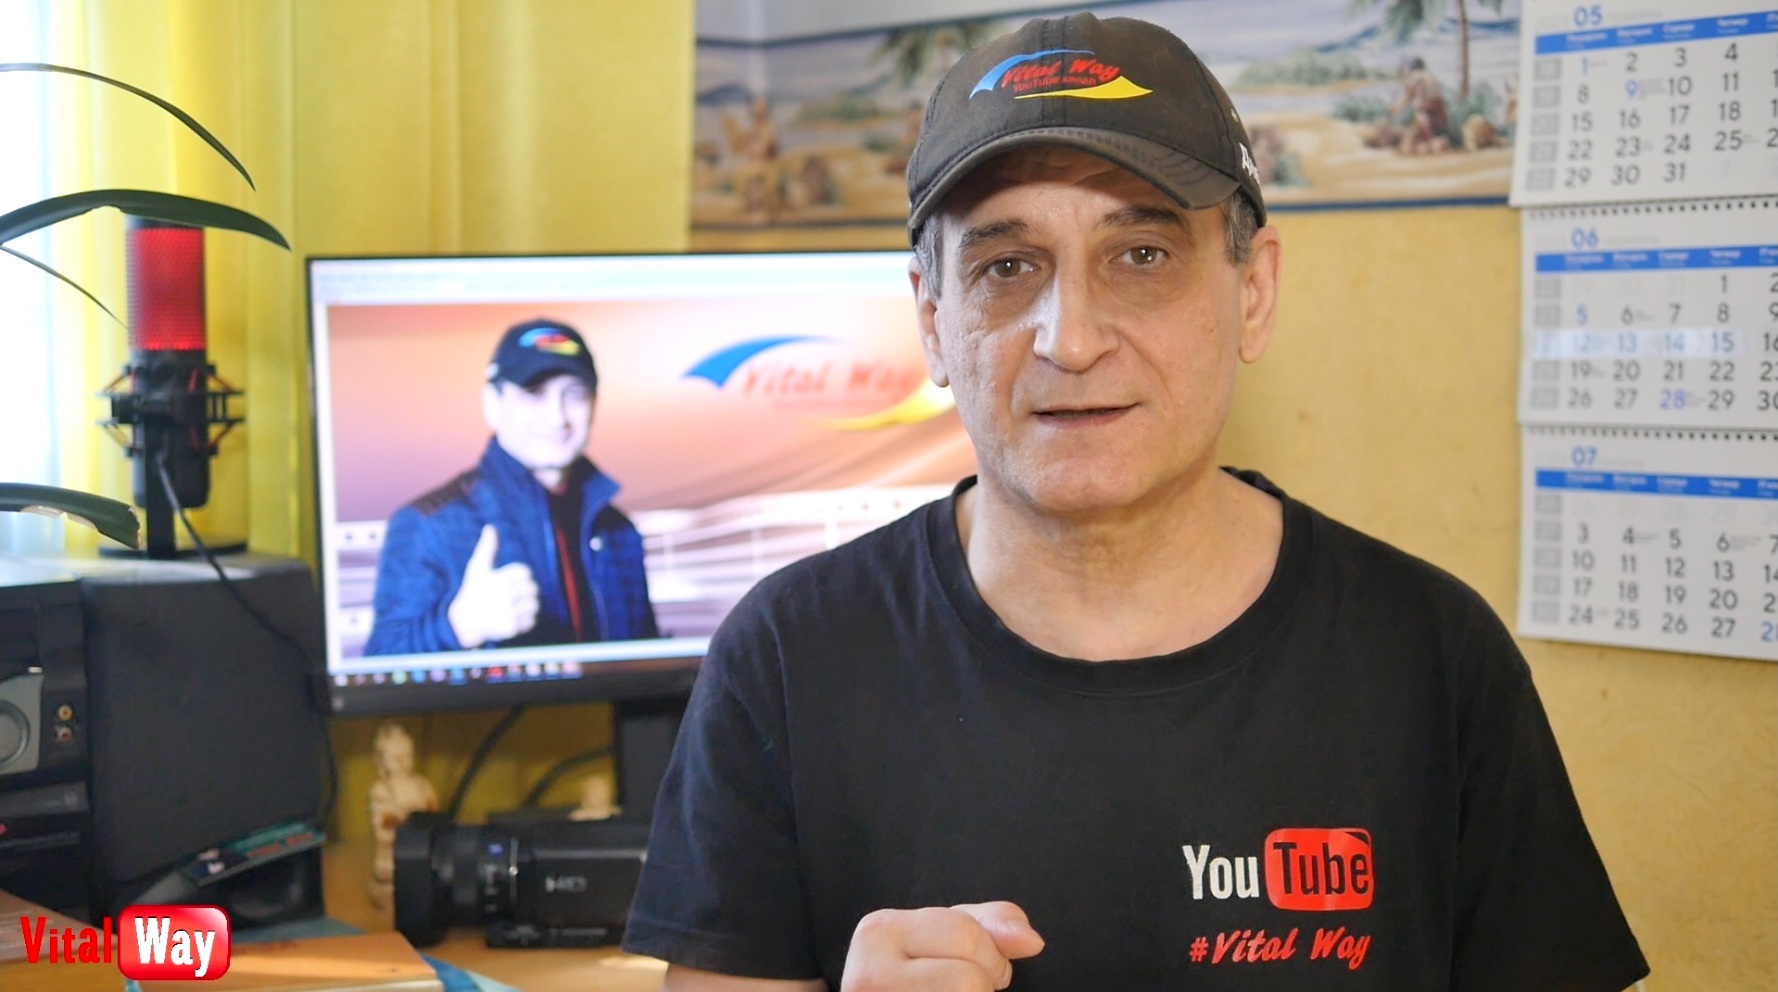 Виталий Пискун - видеоблогер из Украины, канал Vital Way